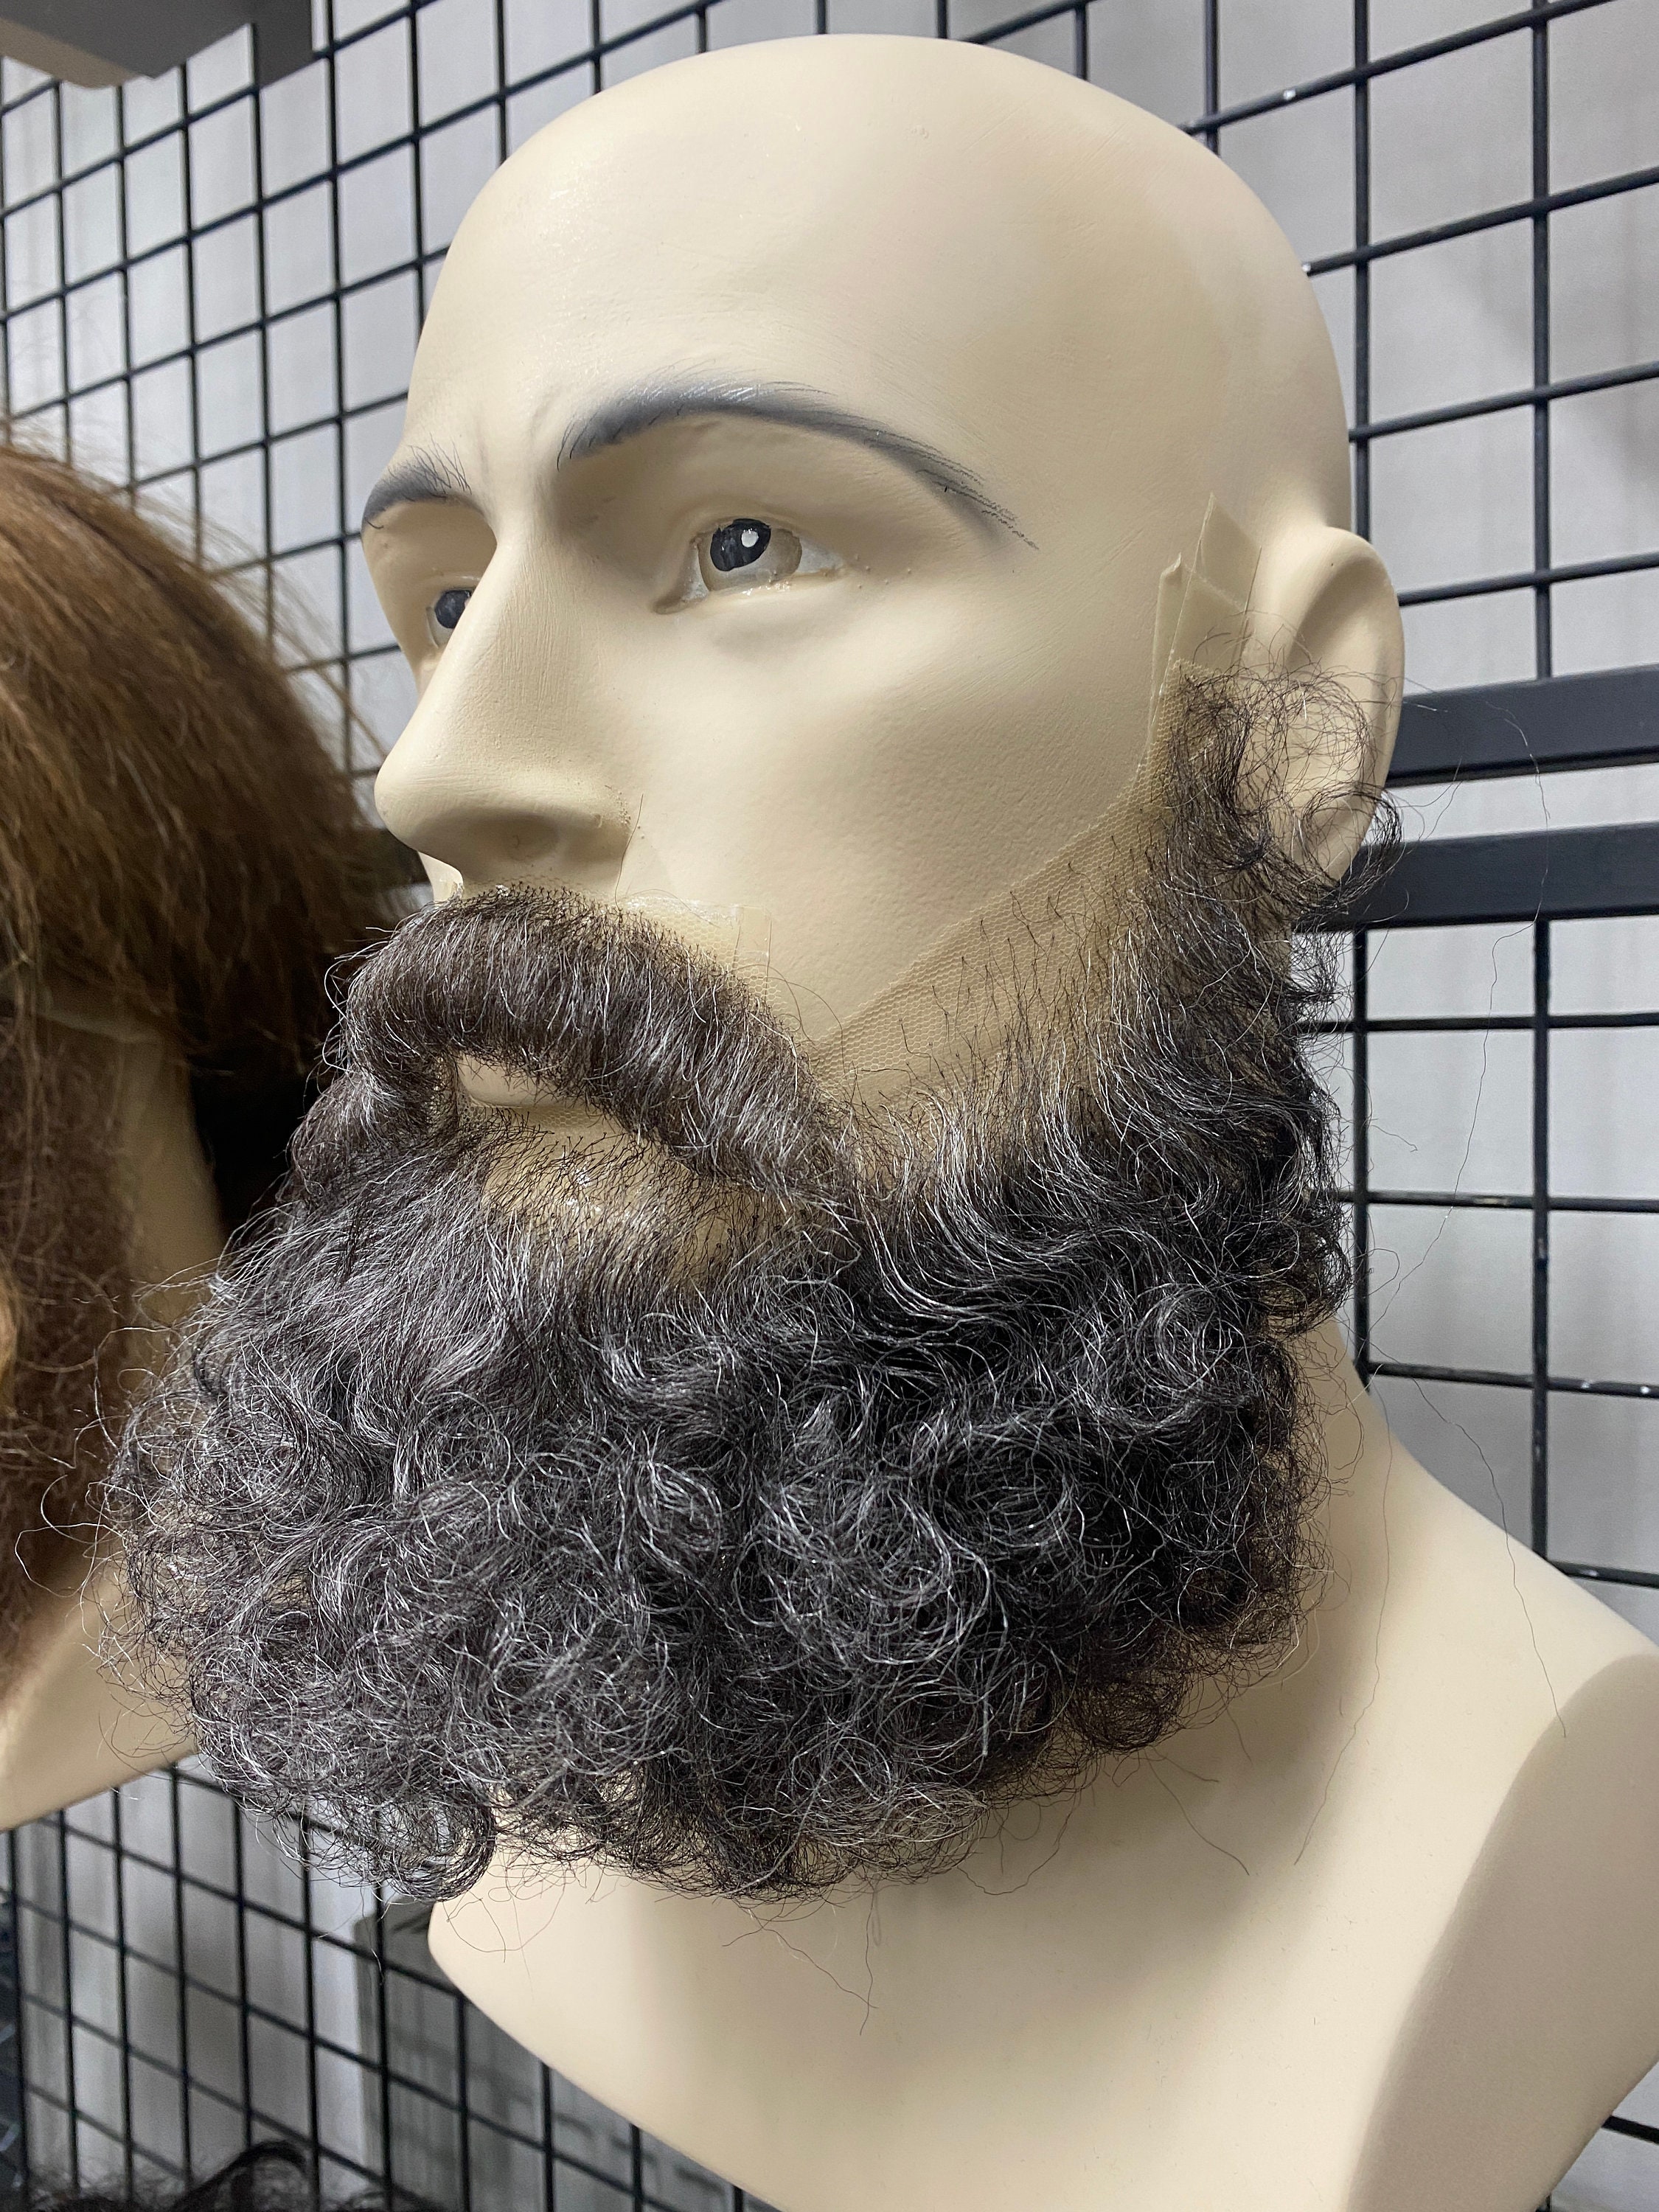 Realistic Fake Beard And Moustache Set Human Hair Hand Etsy